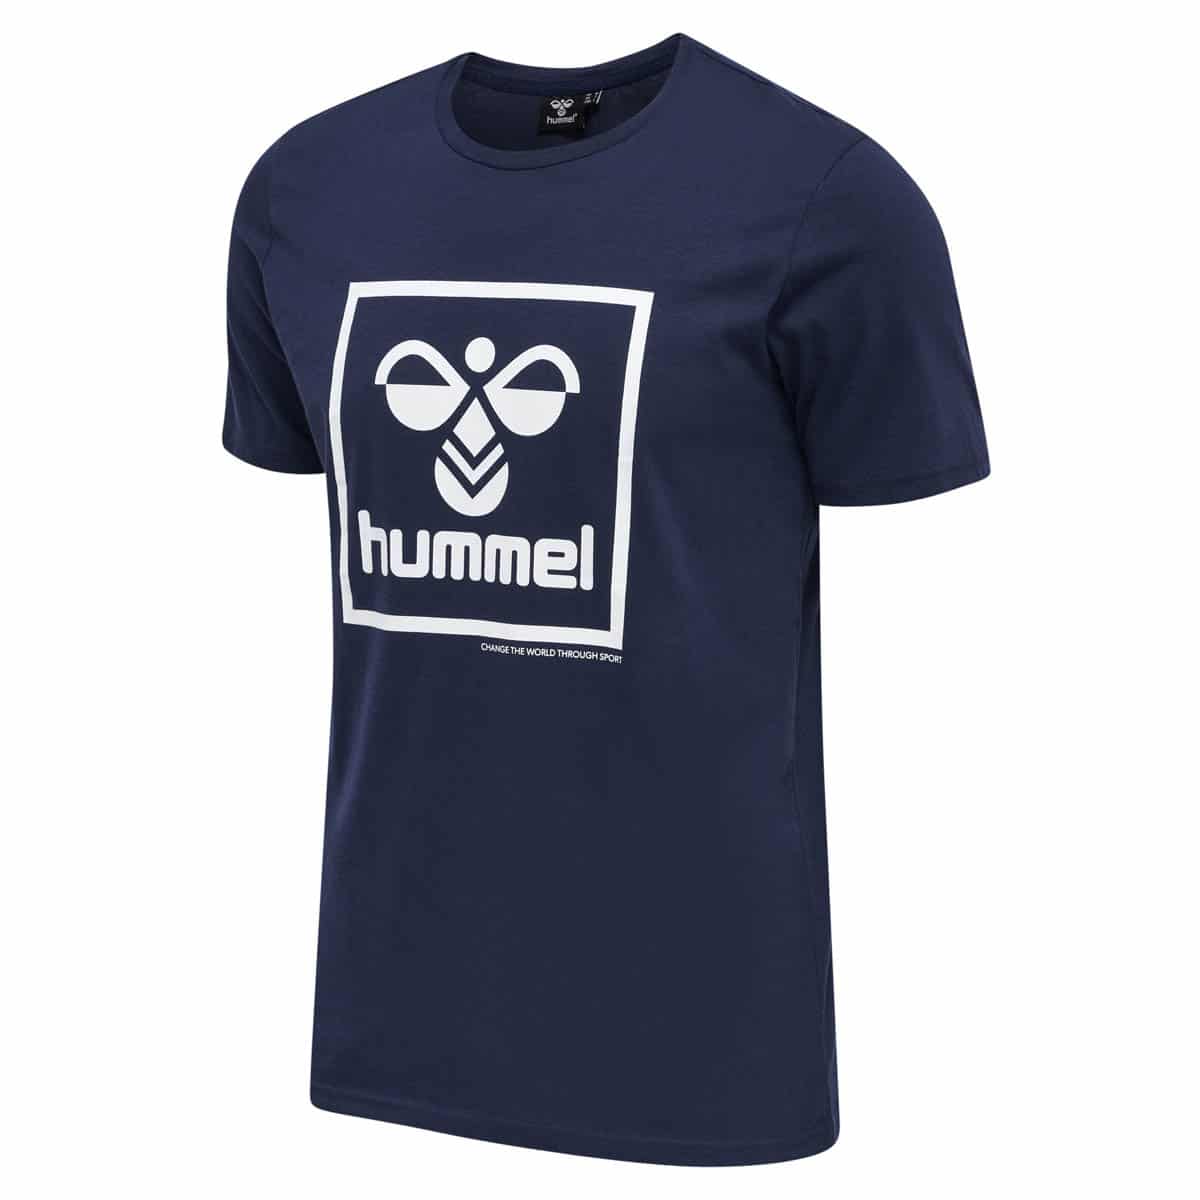 Hummel Isam T-shirts Navy - M